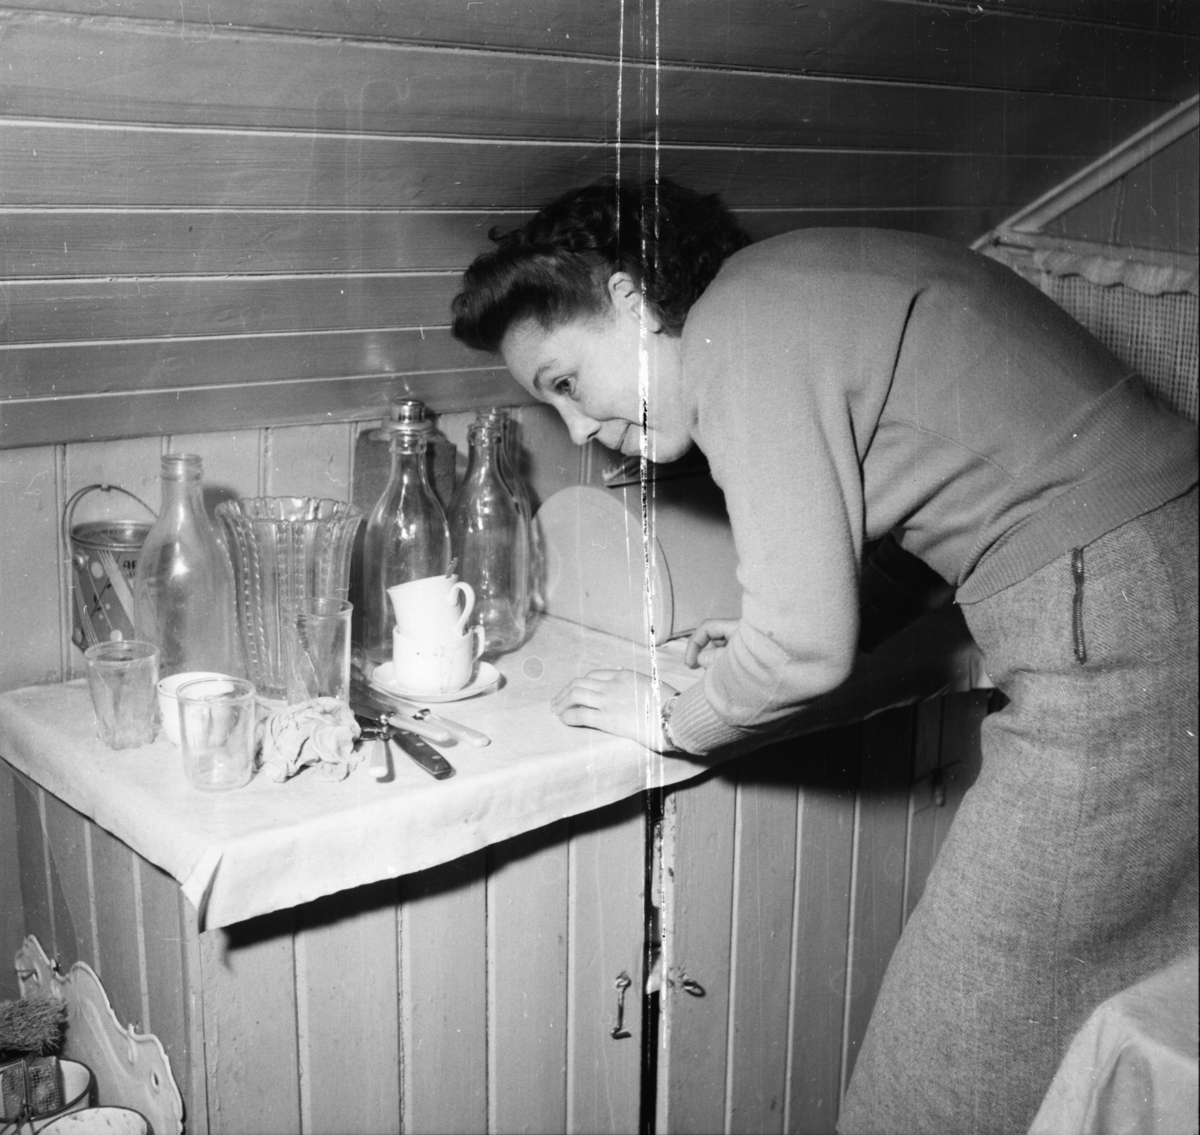 Vardens arkiv. "Elendige boligforhold i Skien"  28.04.1954